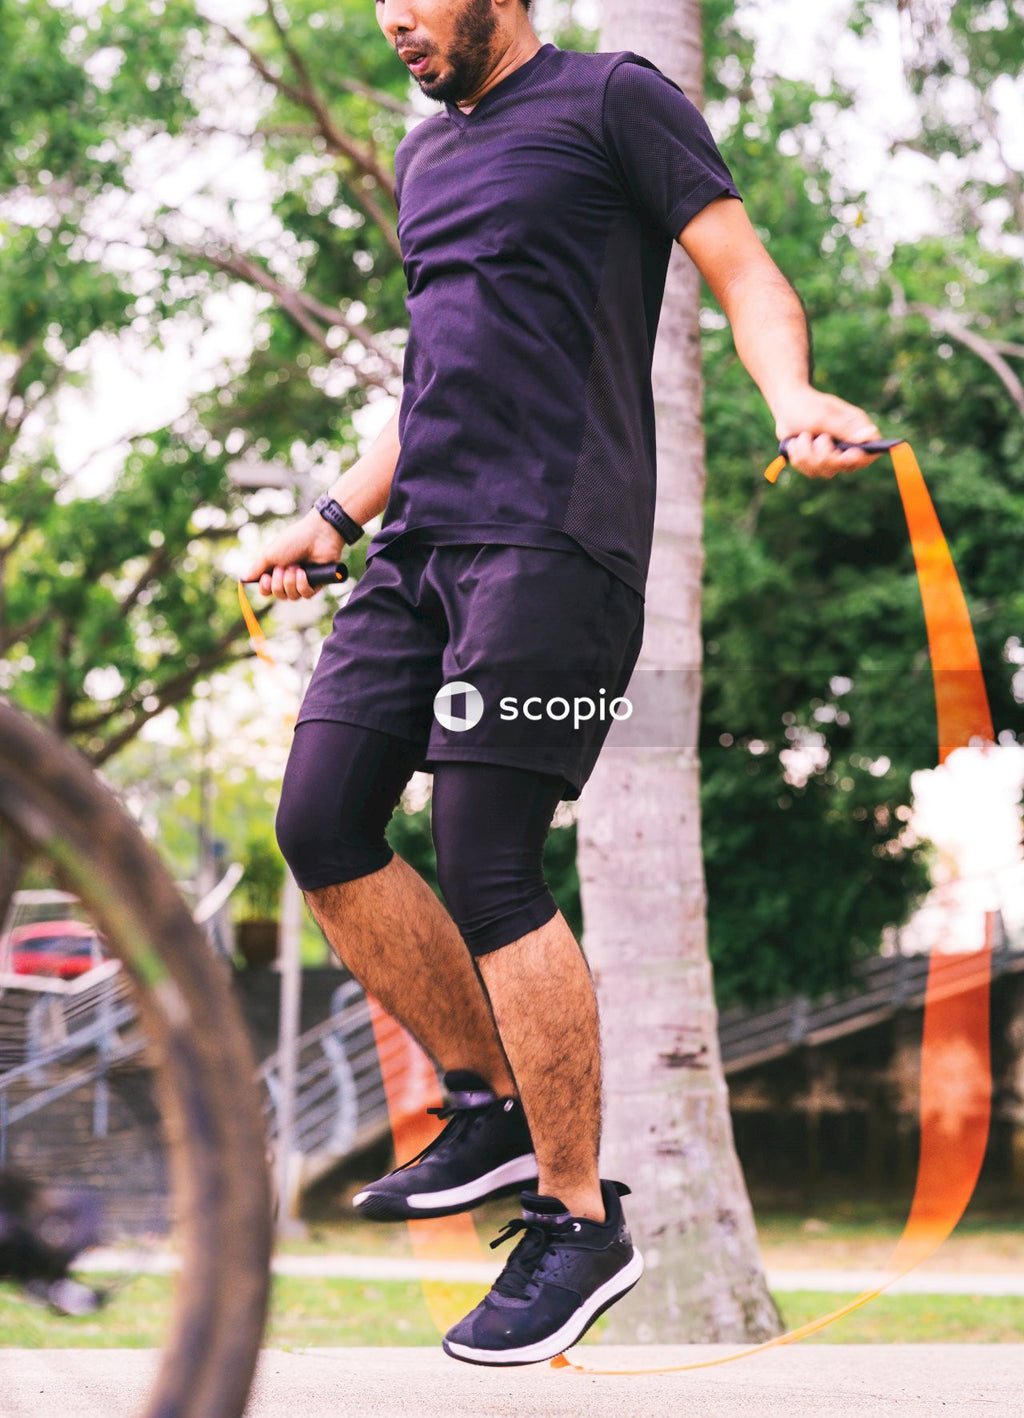 Man in black t-shirt and black shorts doing skateboard stunts